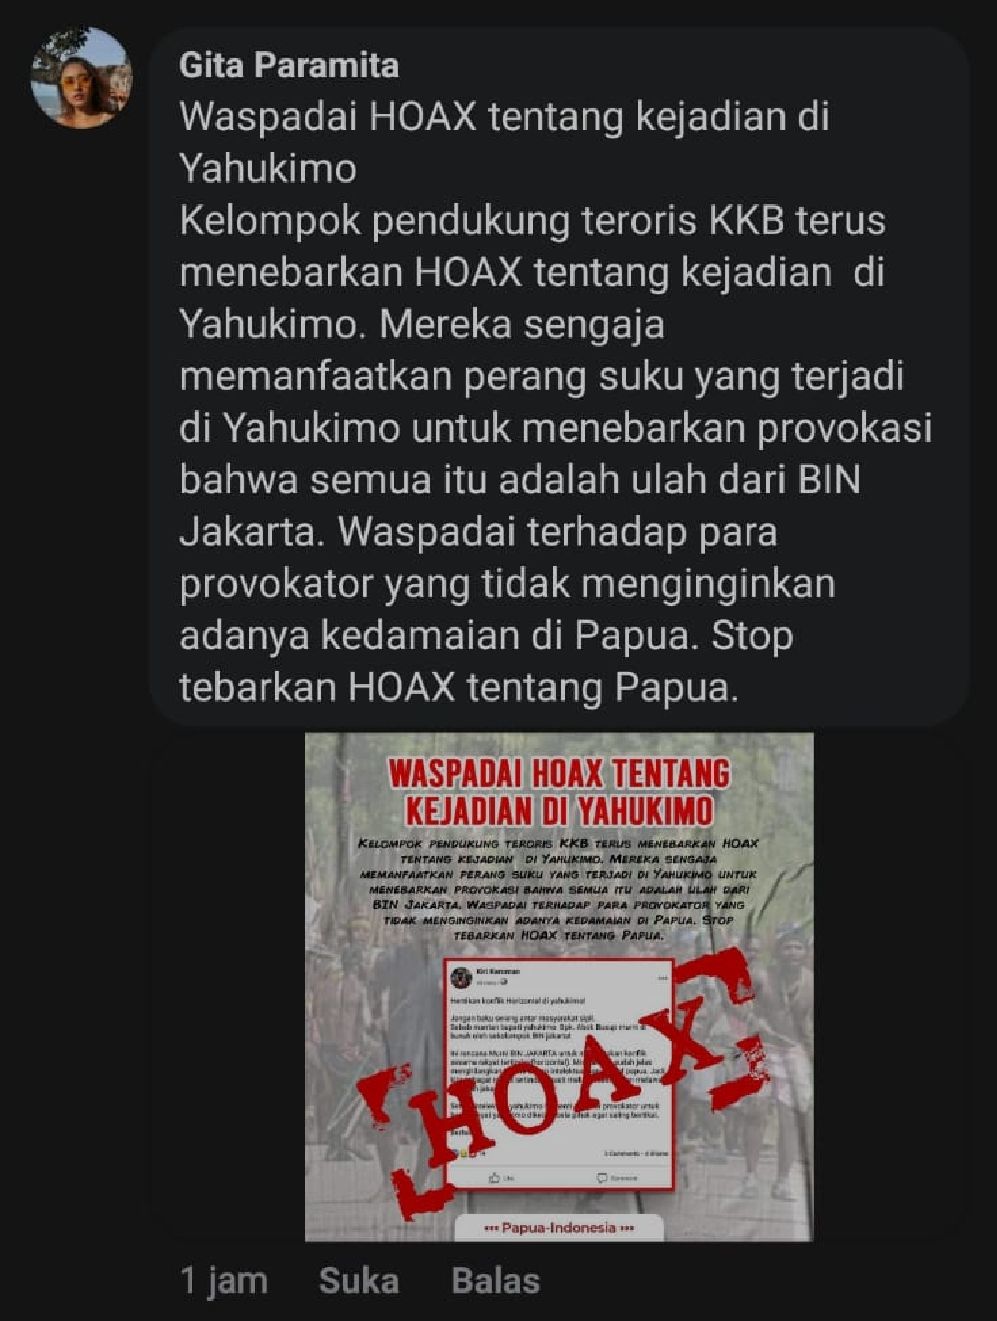 Postingan netizen di facebook yang menyebutkan KKB, tengah sebar HOAX